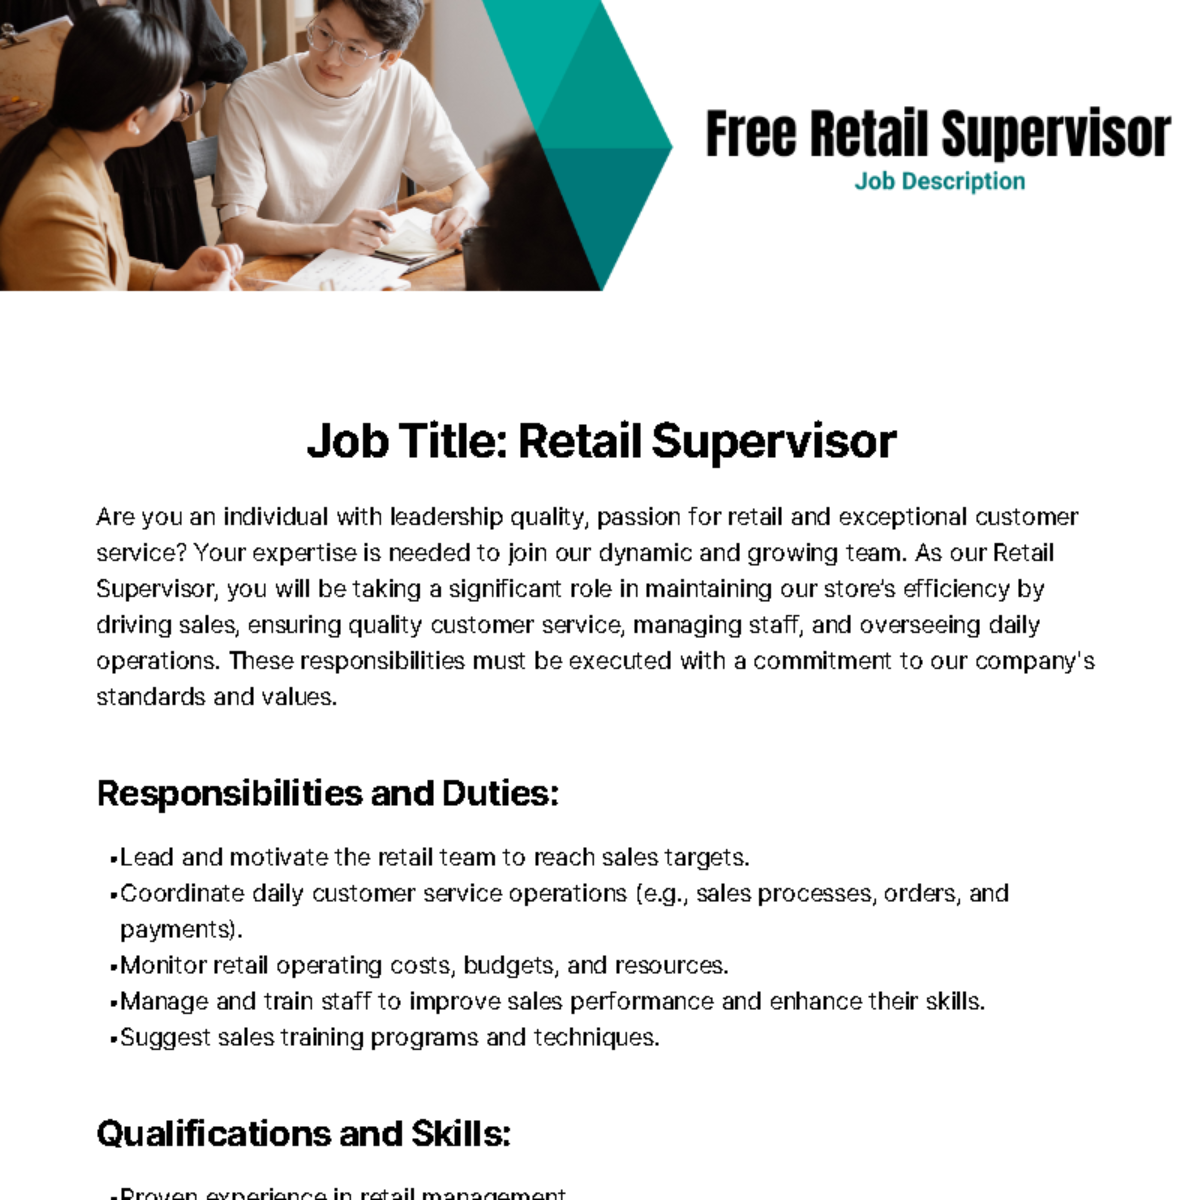 Free Retail Supervisor Job Description Template